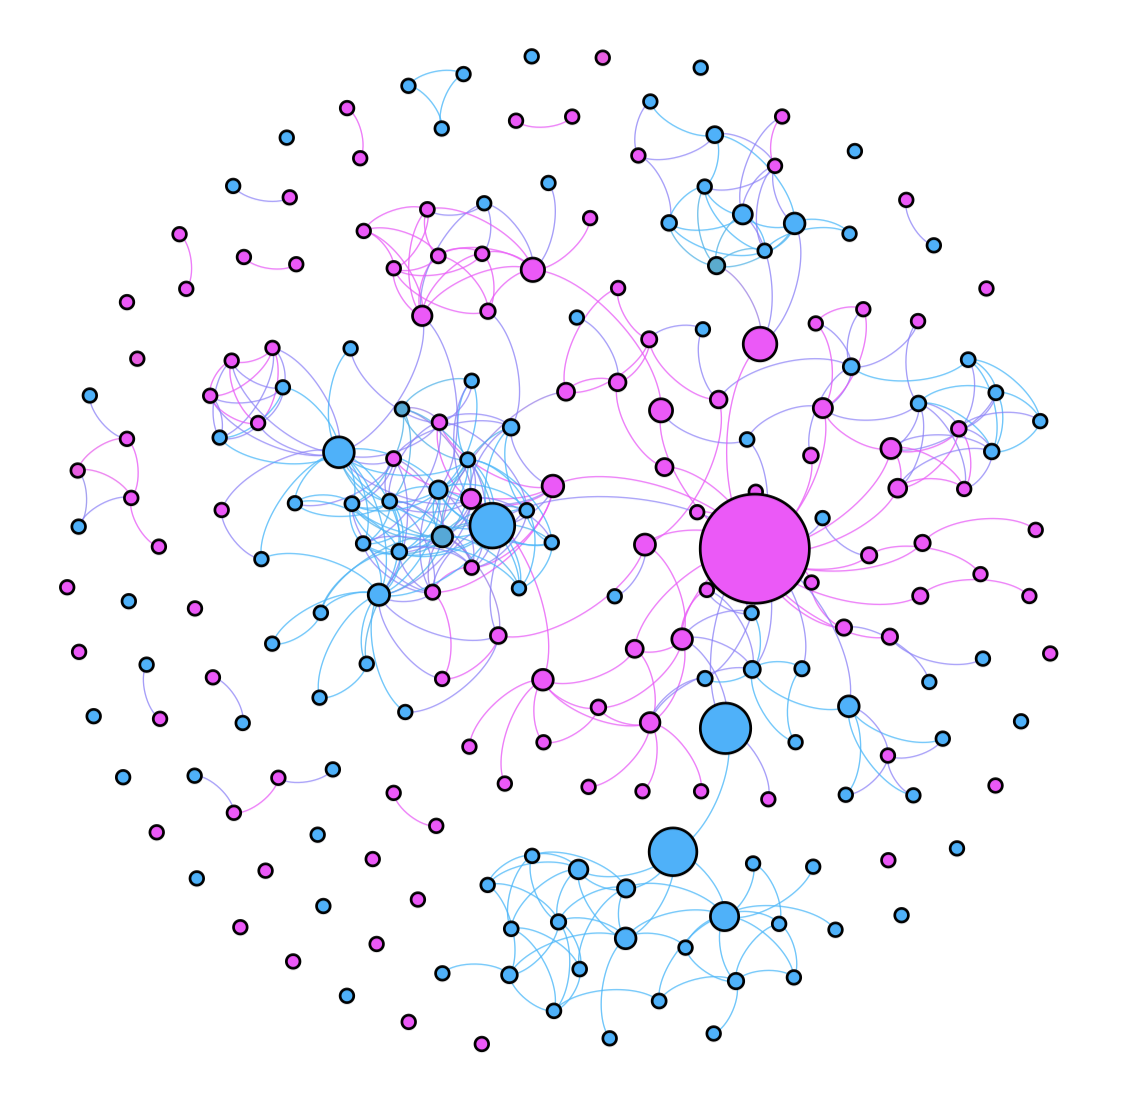 Complex-Network/Complex_Network_Analysis/社会网络简单理解.md at